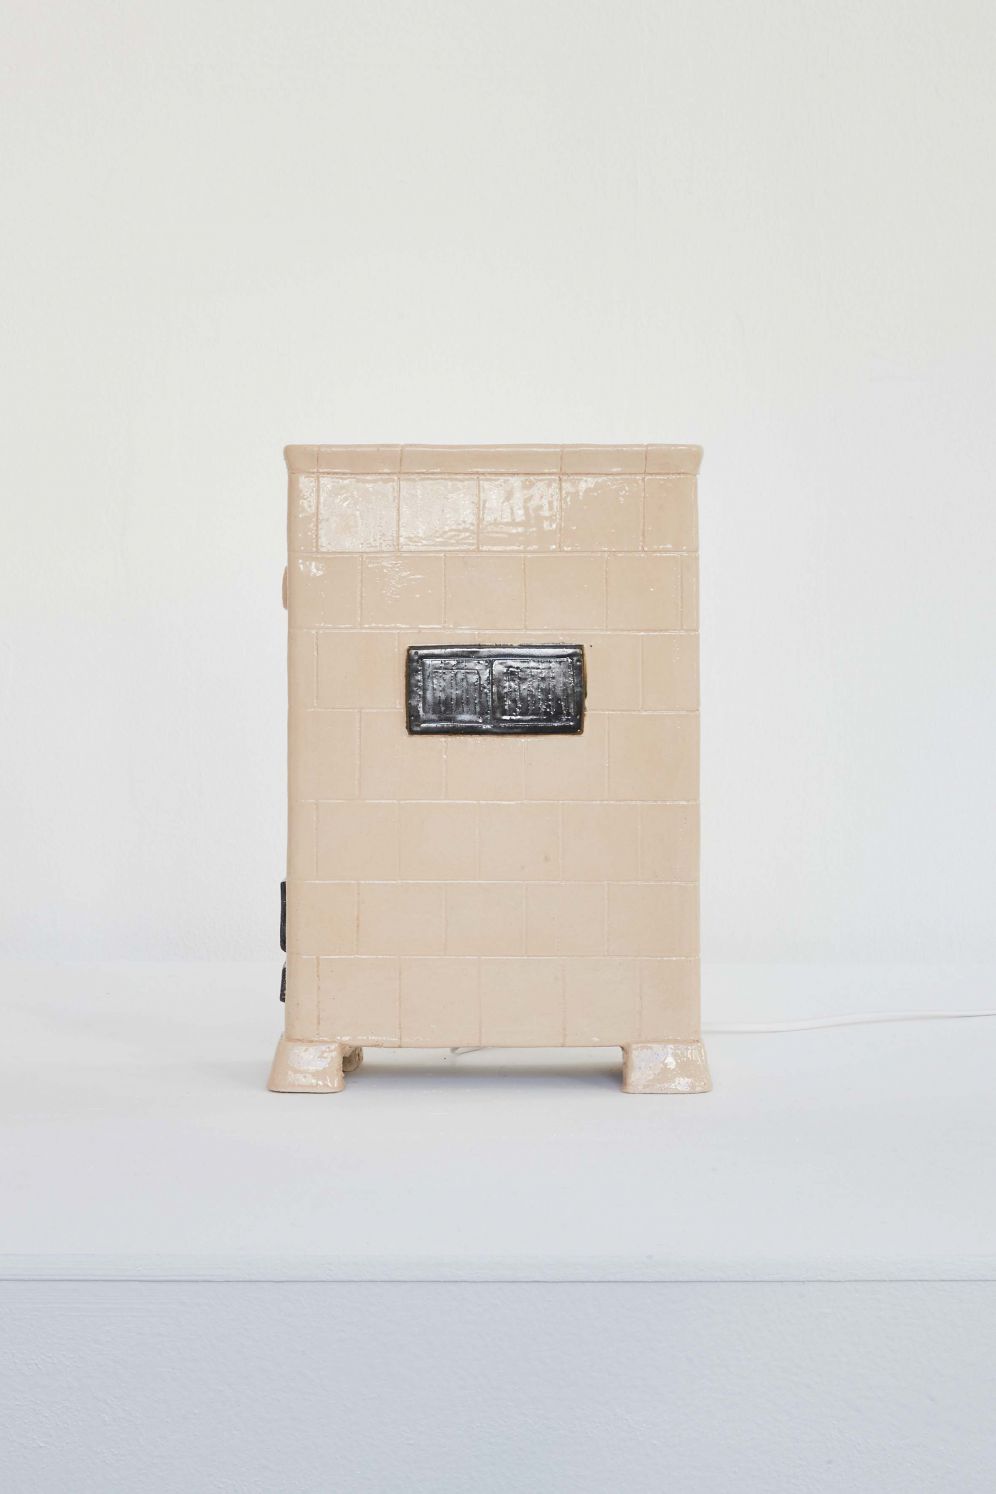 *Shira*, Glazed ceramic, electrical wiring and heating film, 32 × 23 × 9 cm, 2020